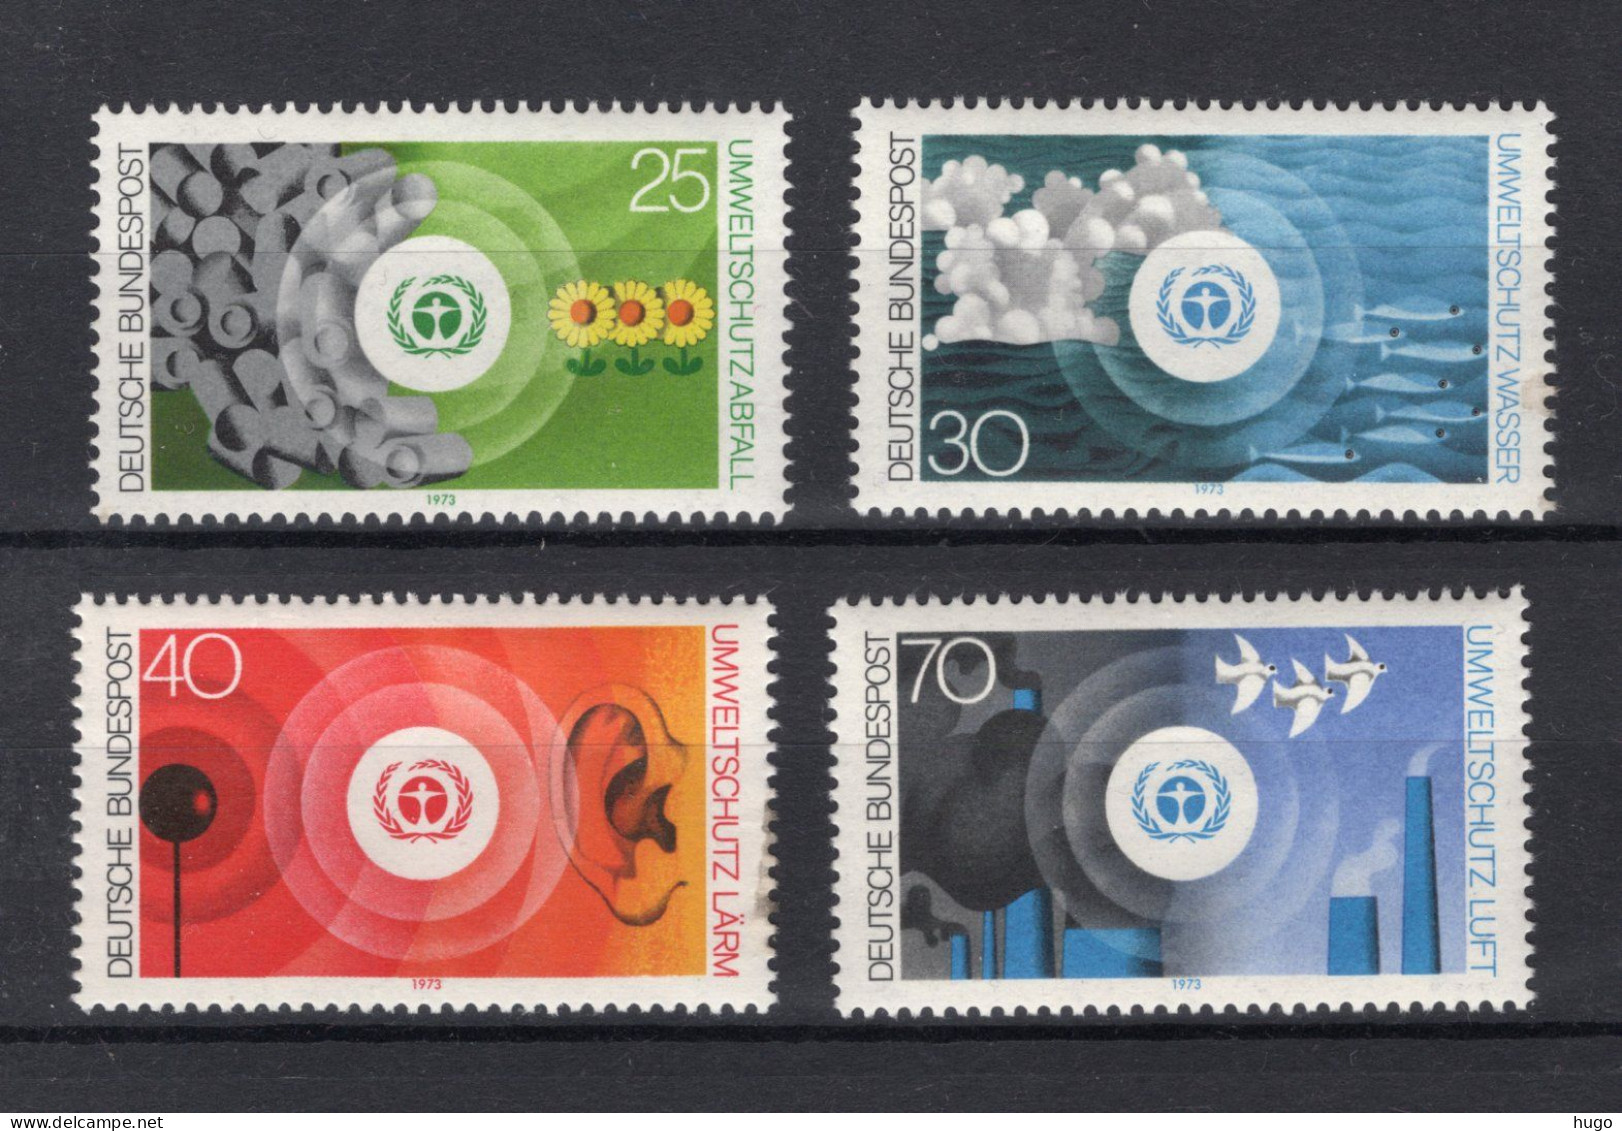 DUITSLAND Yt. 623/626 MH 1973 - Unused Stamps